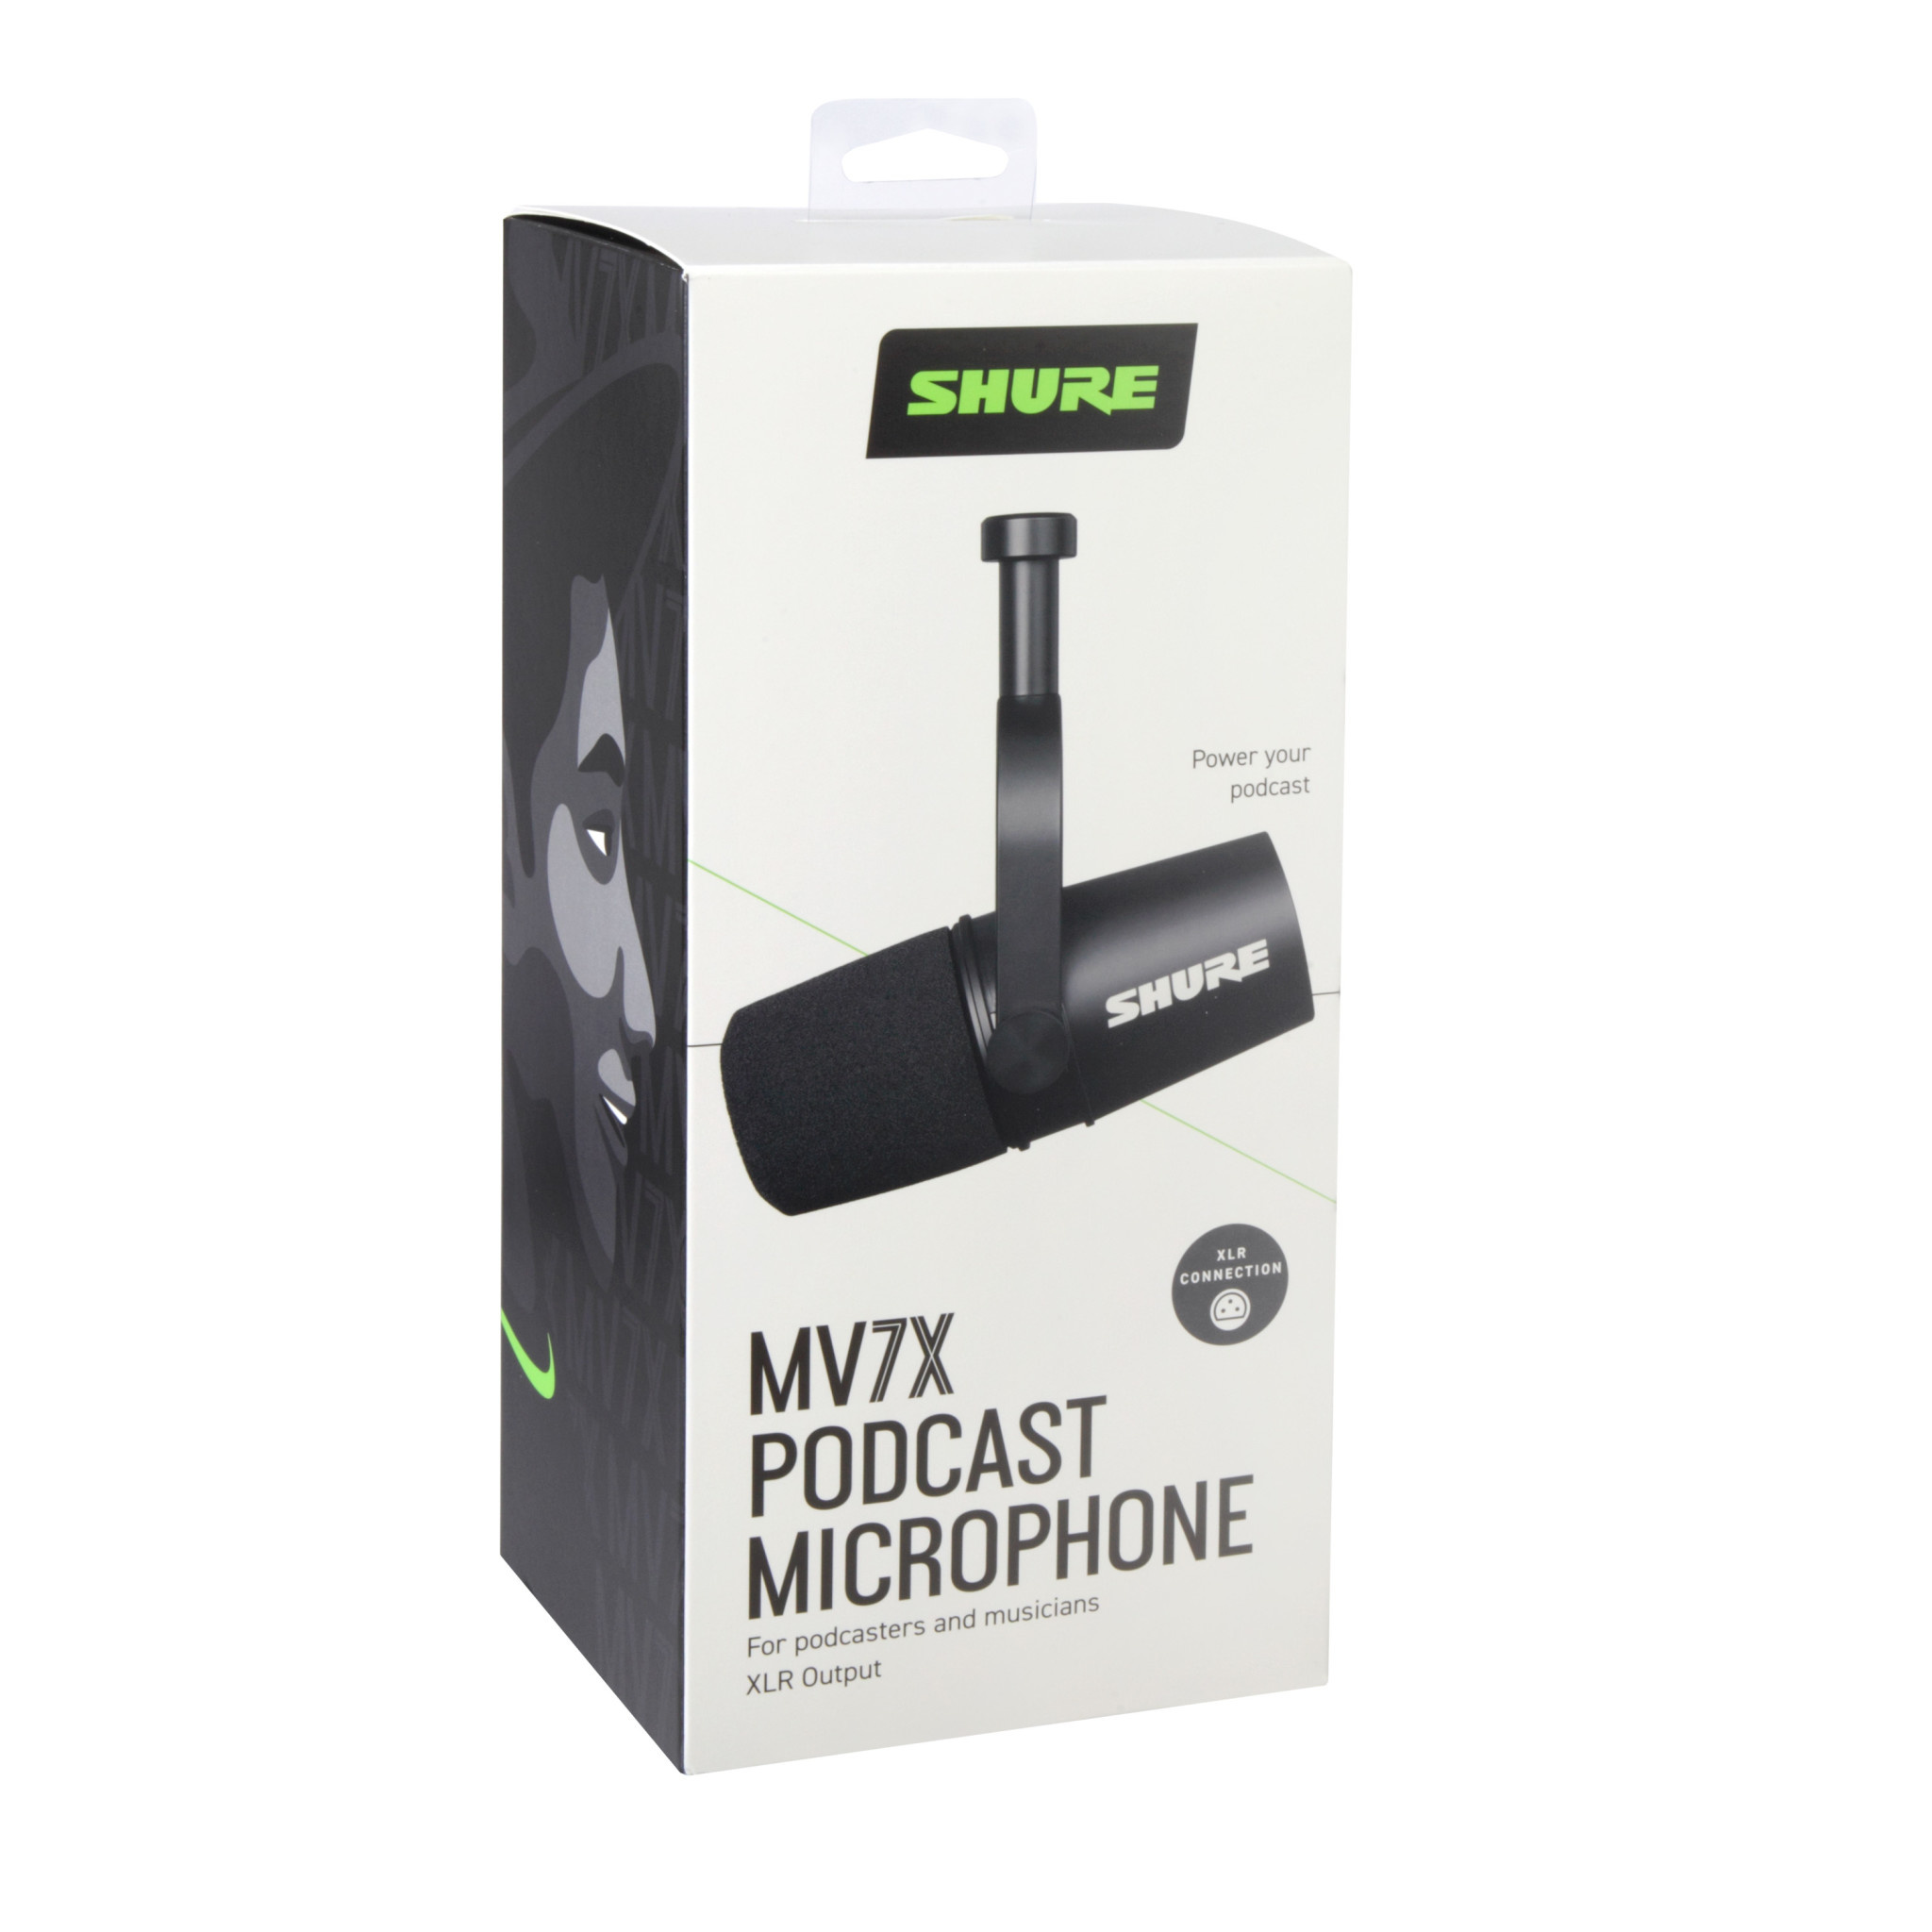 Podcast Microphone Shure MV7X